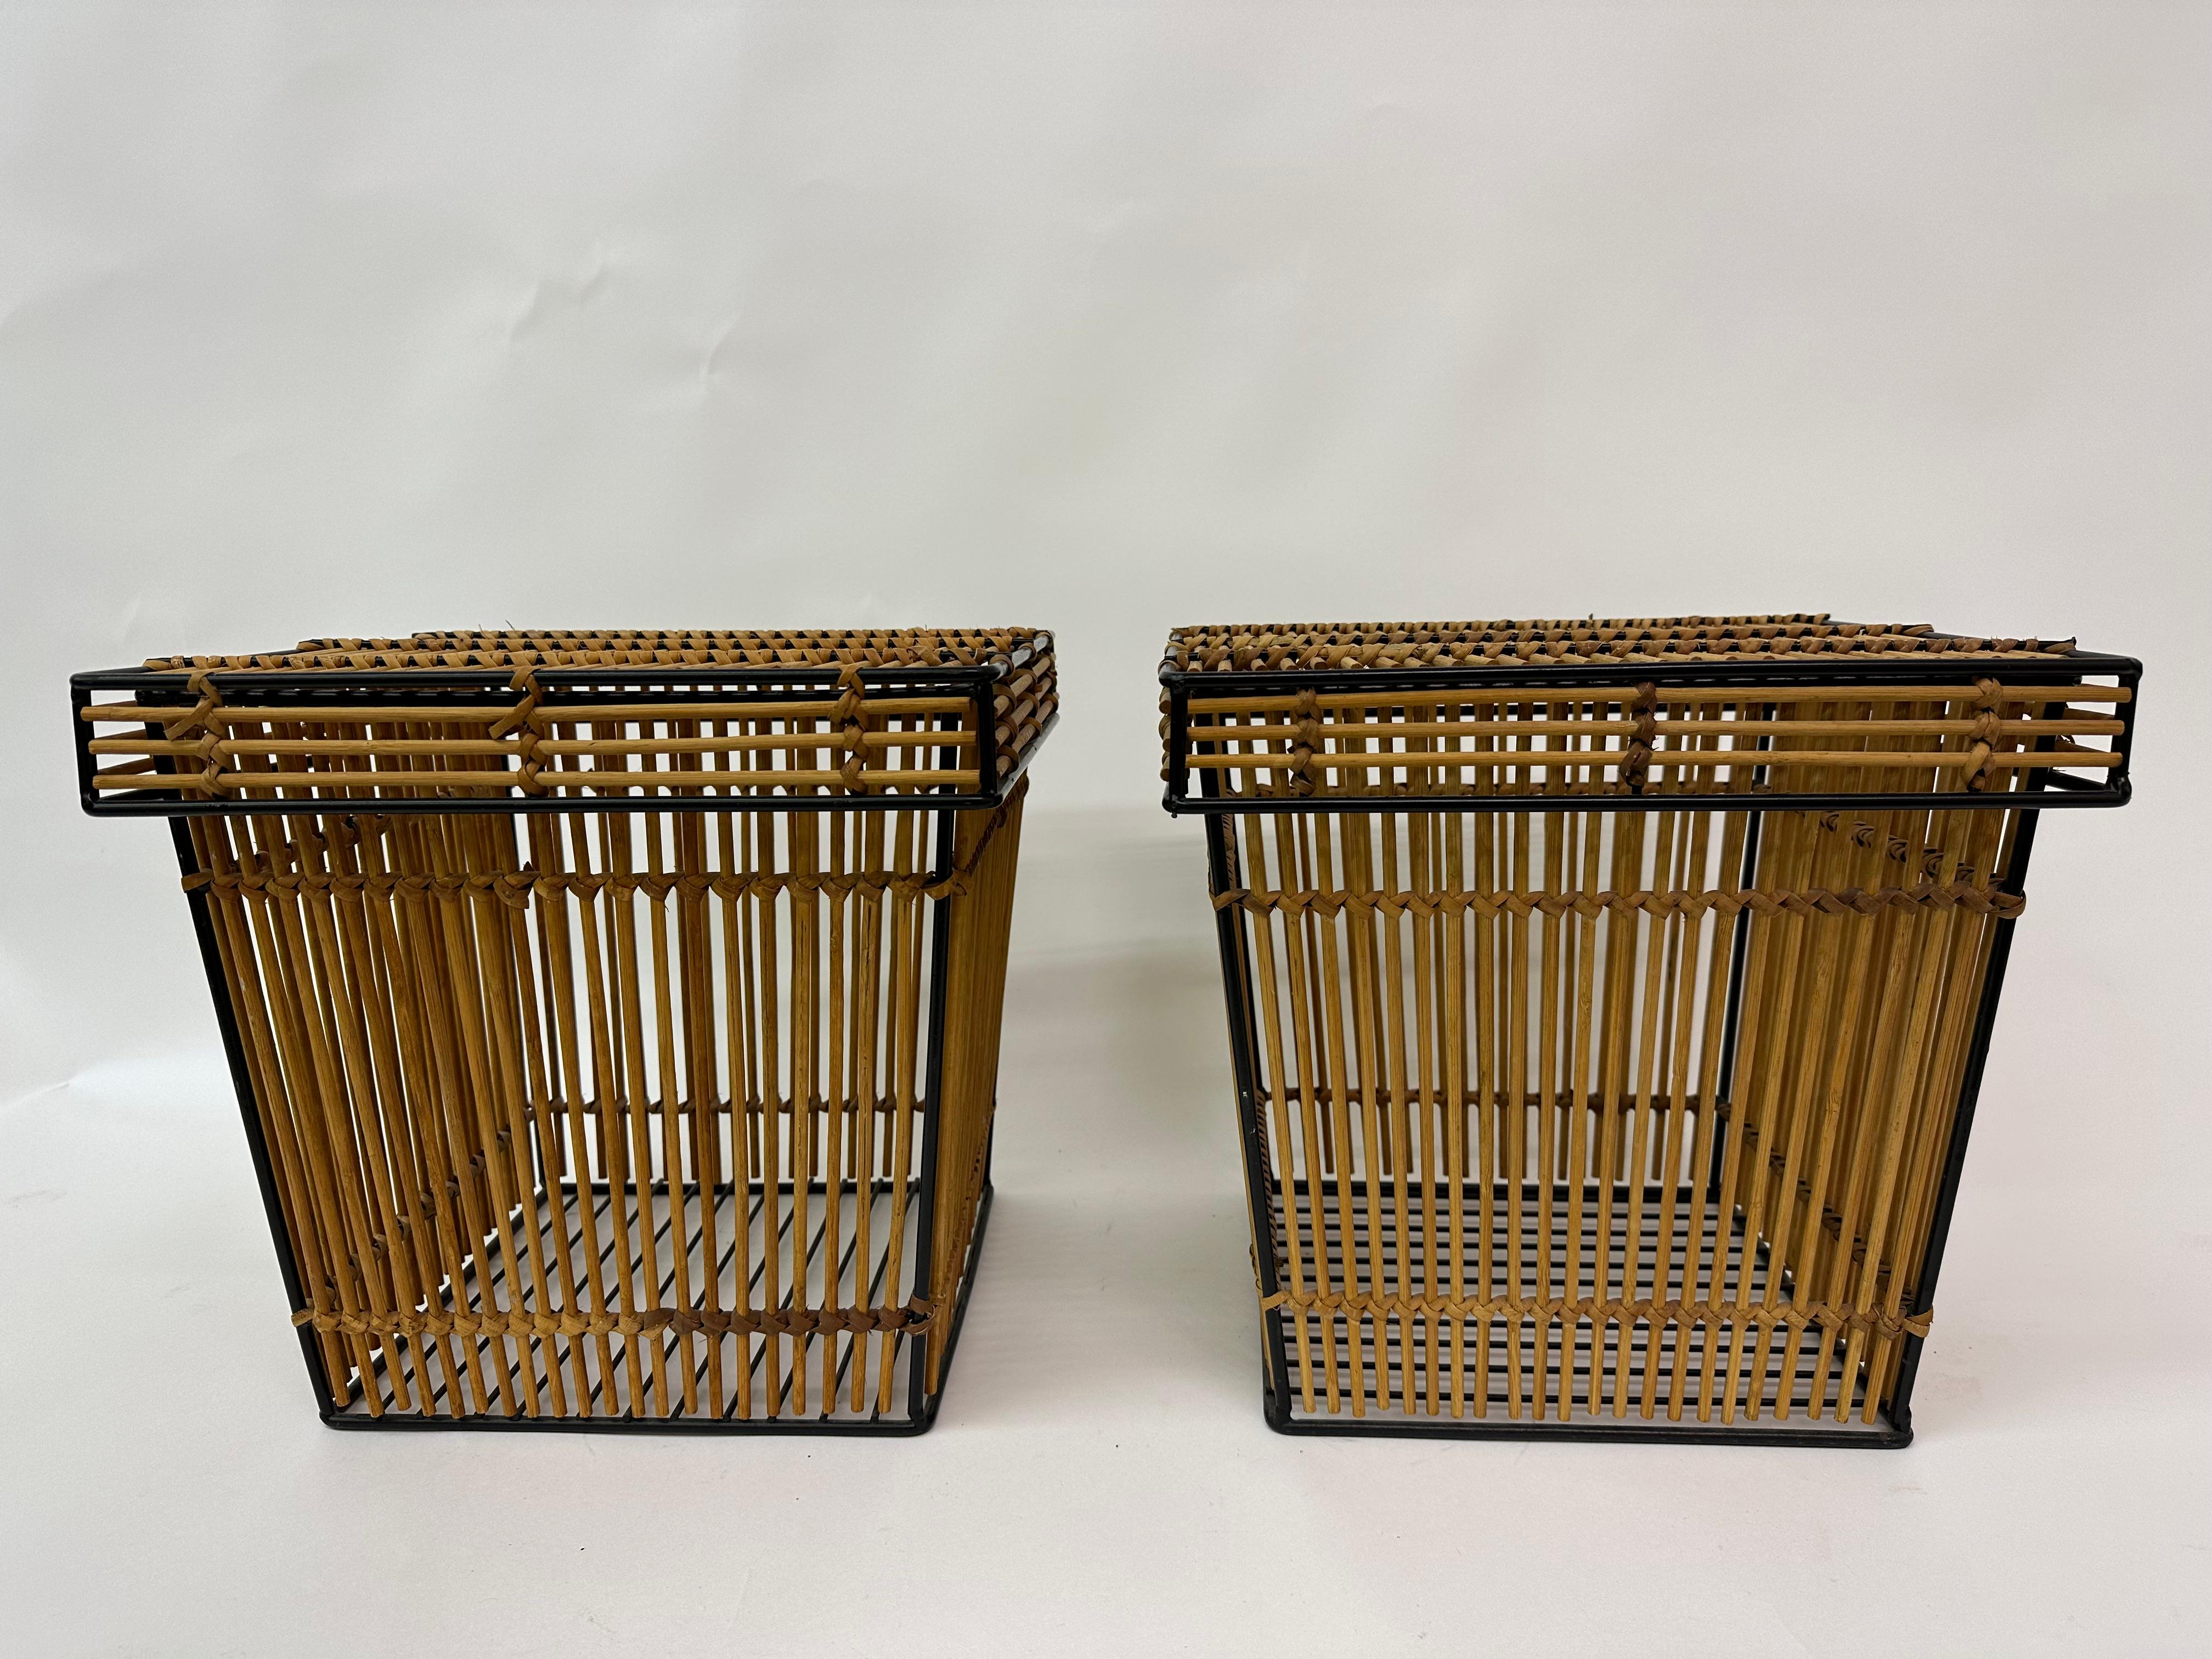 Set of 2 storage baskets by Dirk van Sliedregt for Rohé, Netherlands, 1960s.